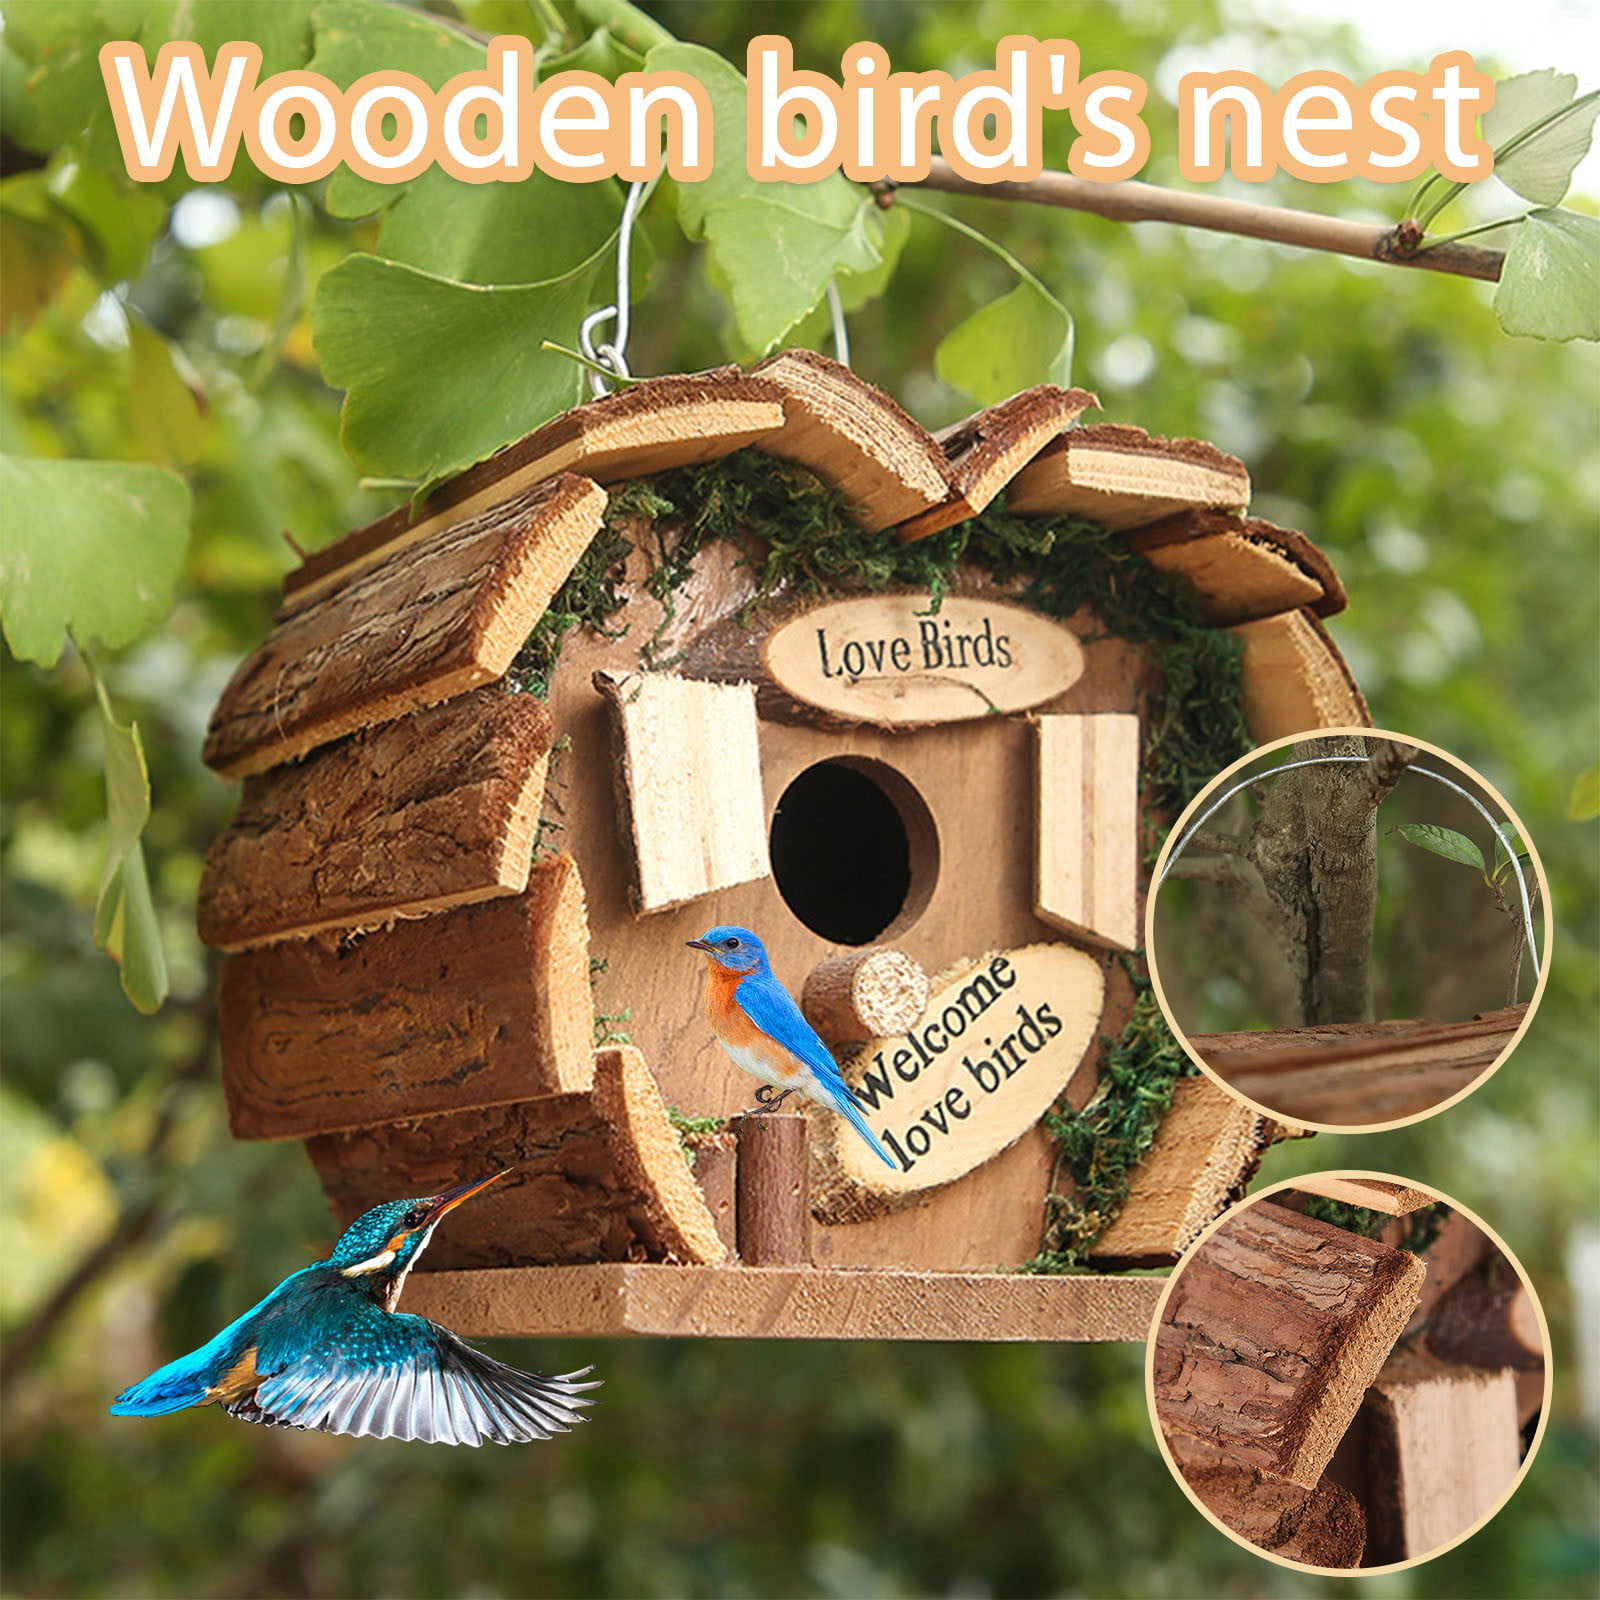 CLEVER GARDEN Hanging Birdhouse Blue Welcome Decorative Outdoor Bird Feeder for Hummingbirds and Wild Birds 